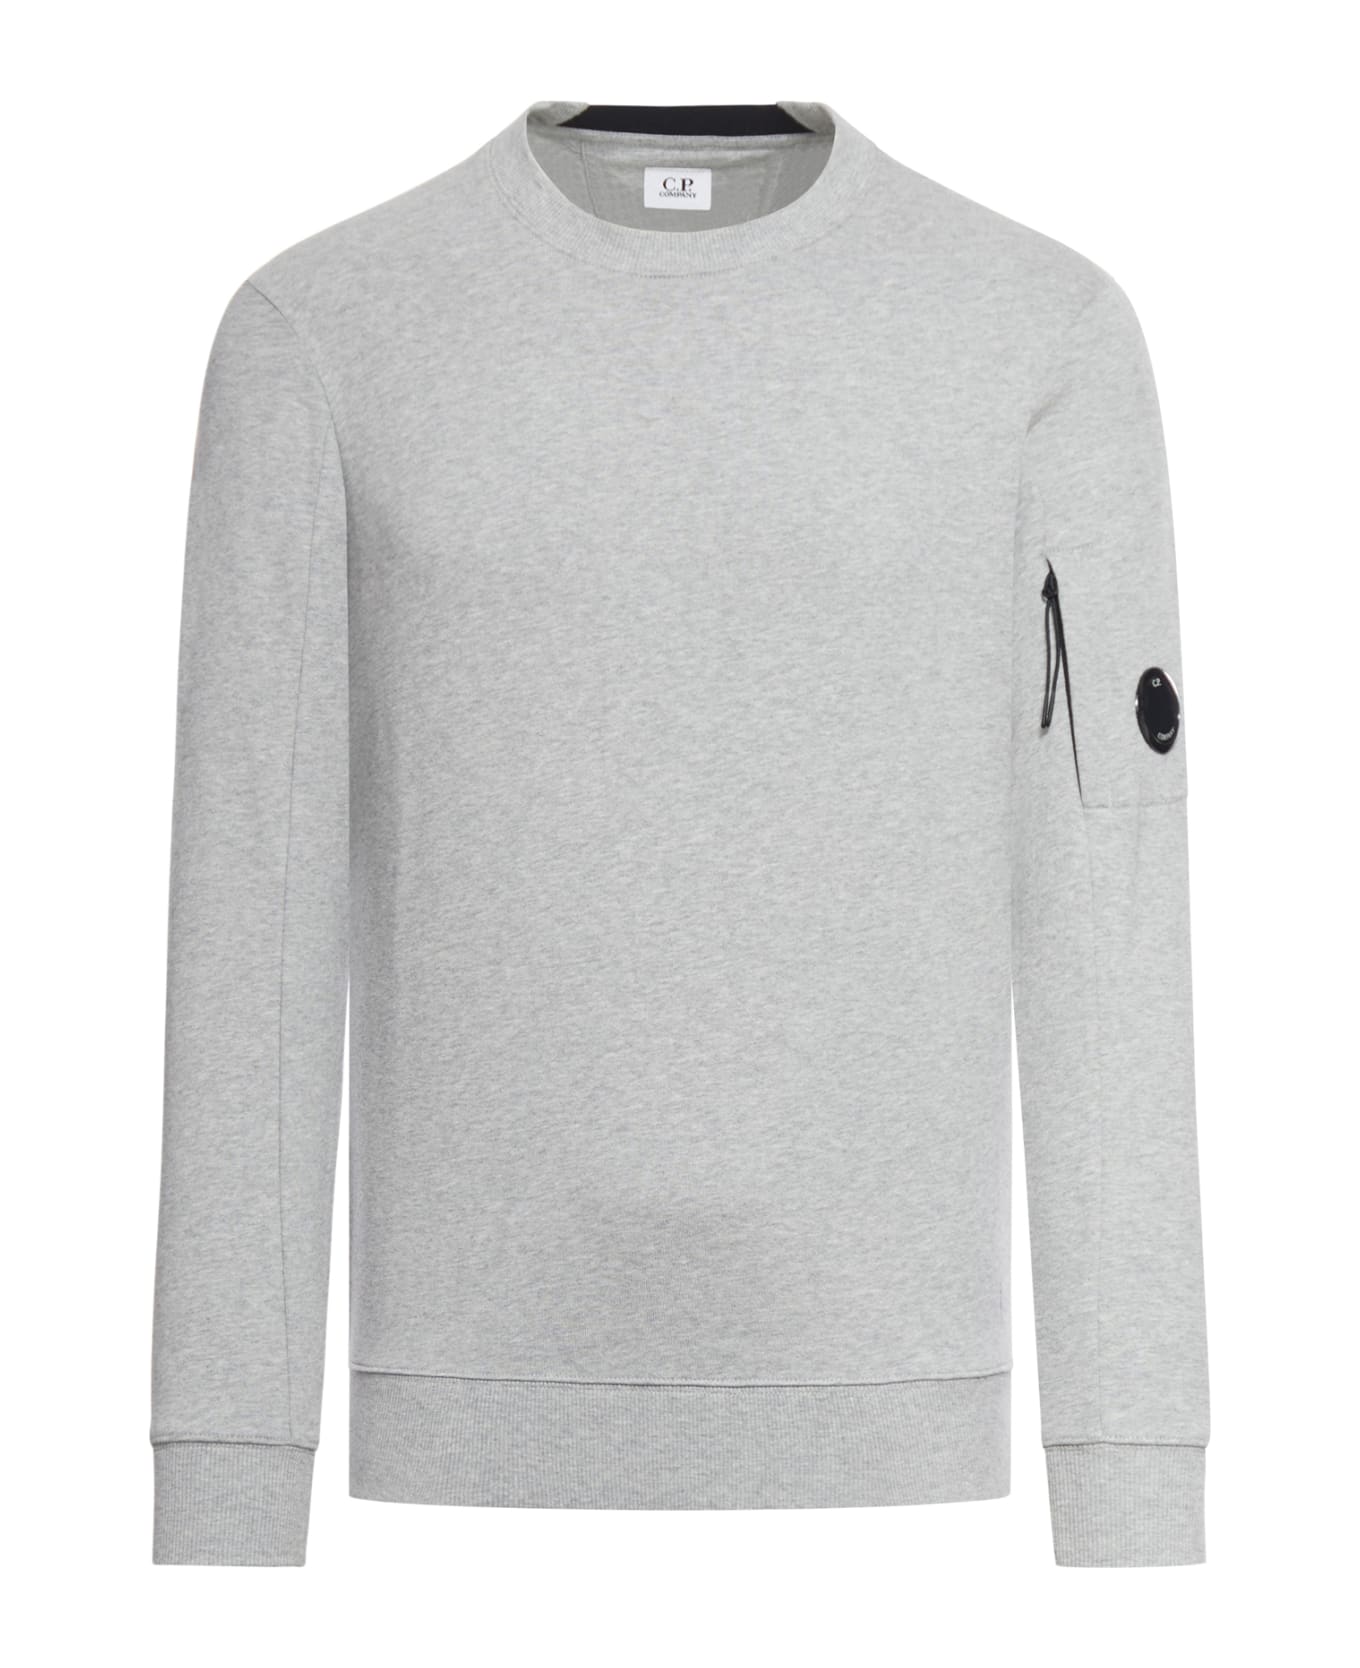 C.P. Company 'diagonal Raised Fleece' Grey Cotton Sweatshirt - Grey Melange フリース